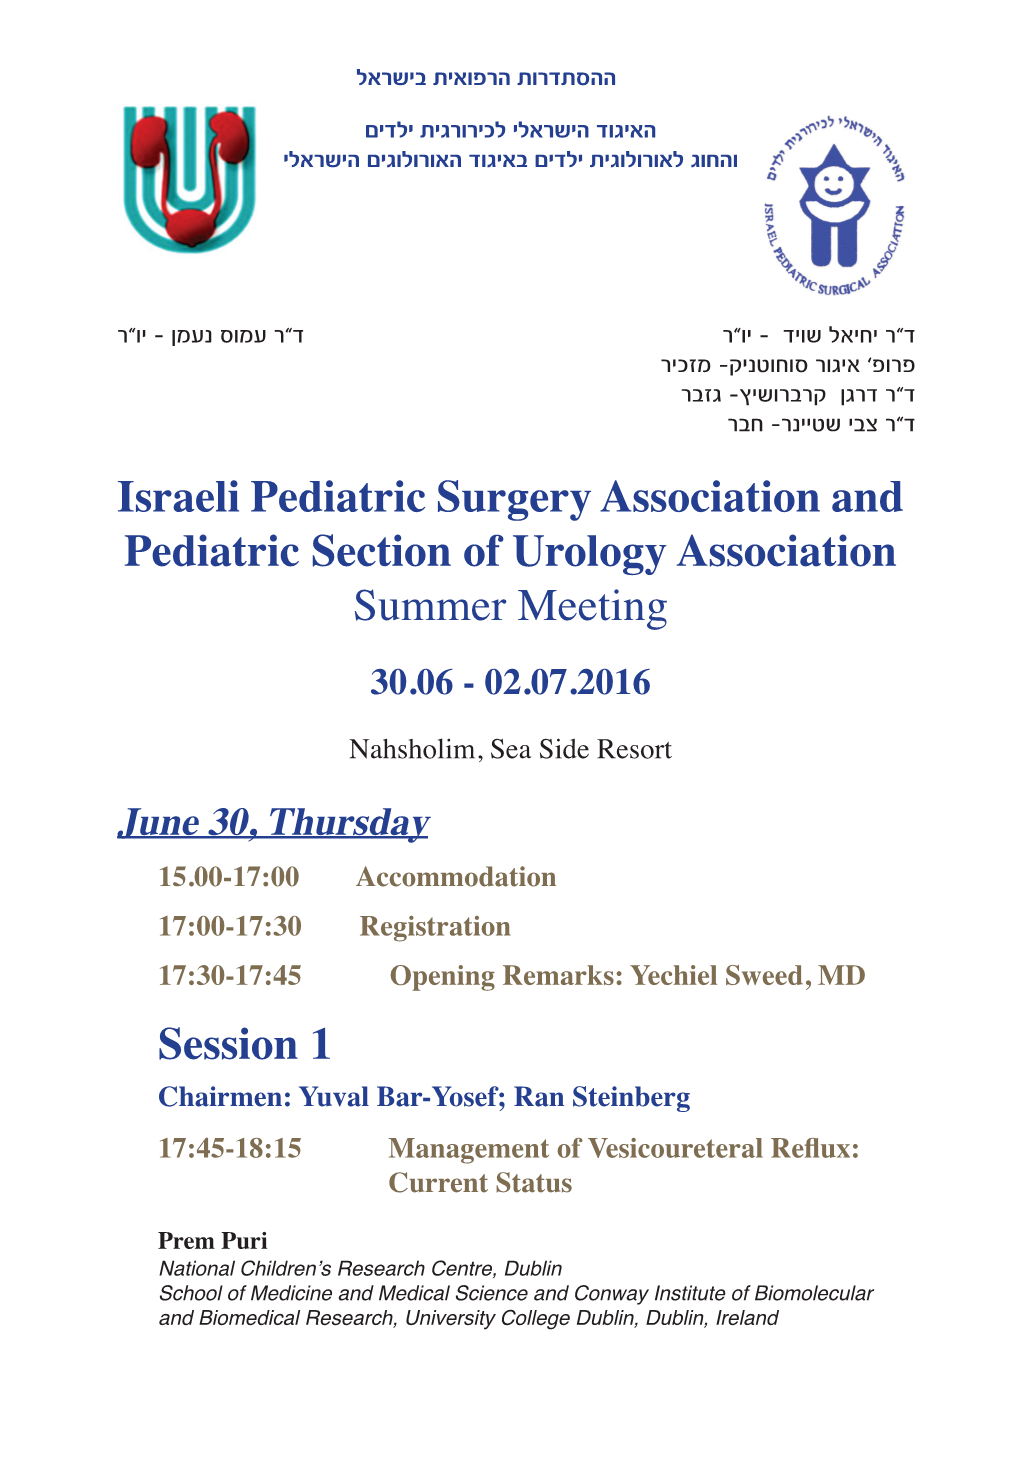 Israeli Pediatric Surgery Association and Pediatric Section of Urology Association ‏Summer Meeting 30.06 - 02.07.2016